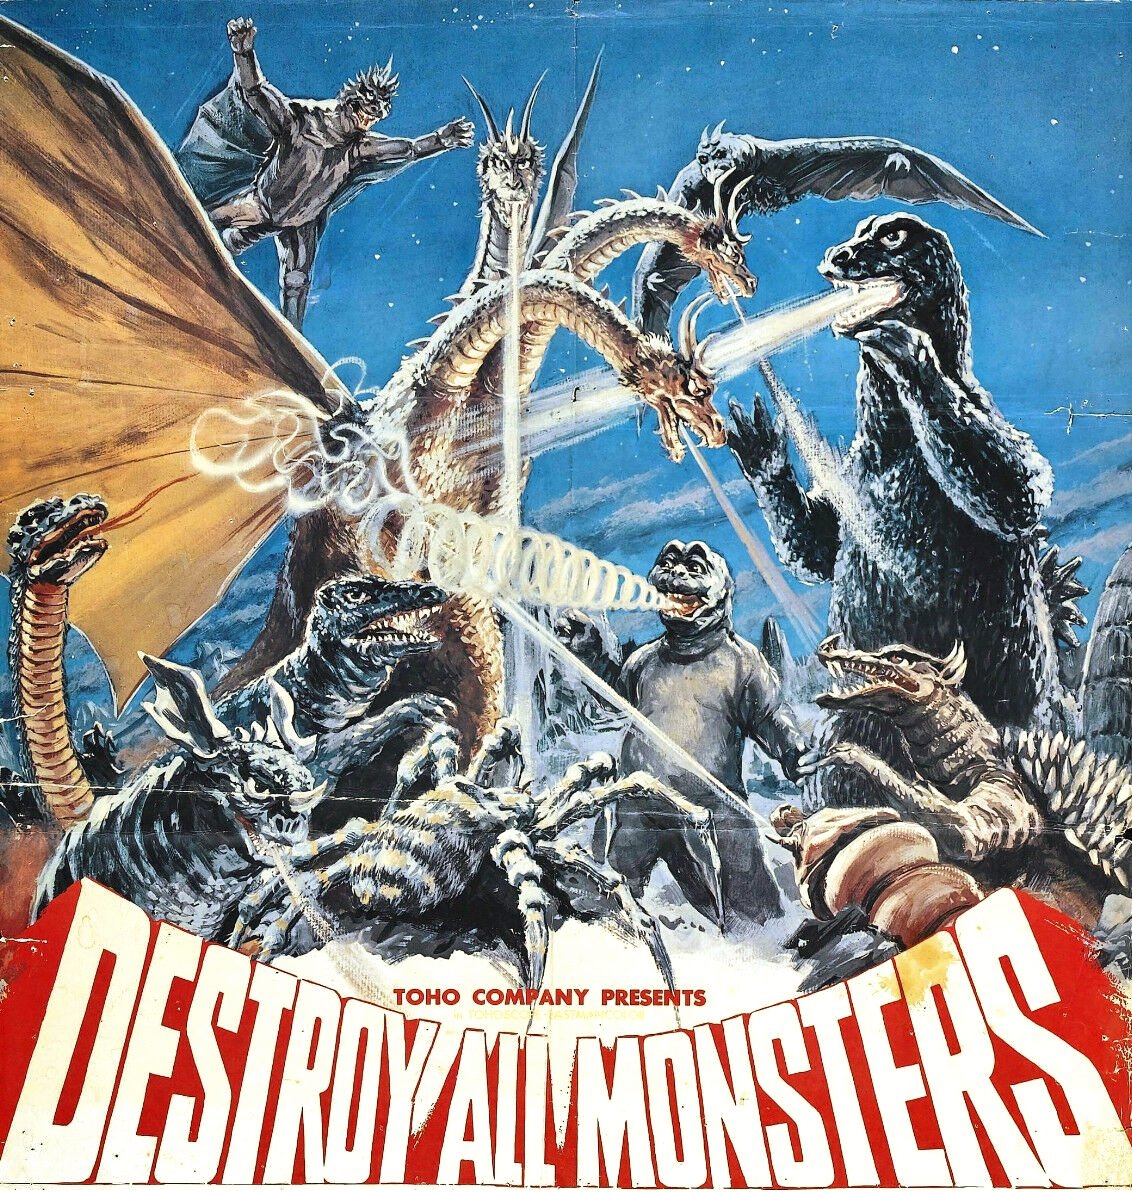 Godzilla Destroy All Monsters [DVD] Manufactured On Demand Region 1 SHIPS FAST!